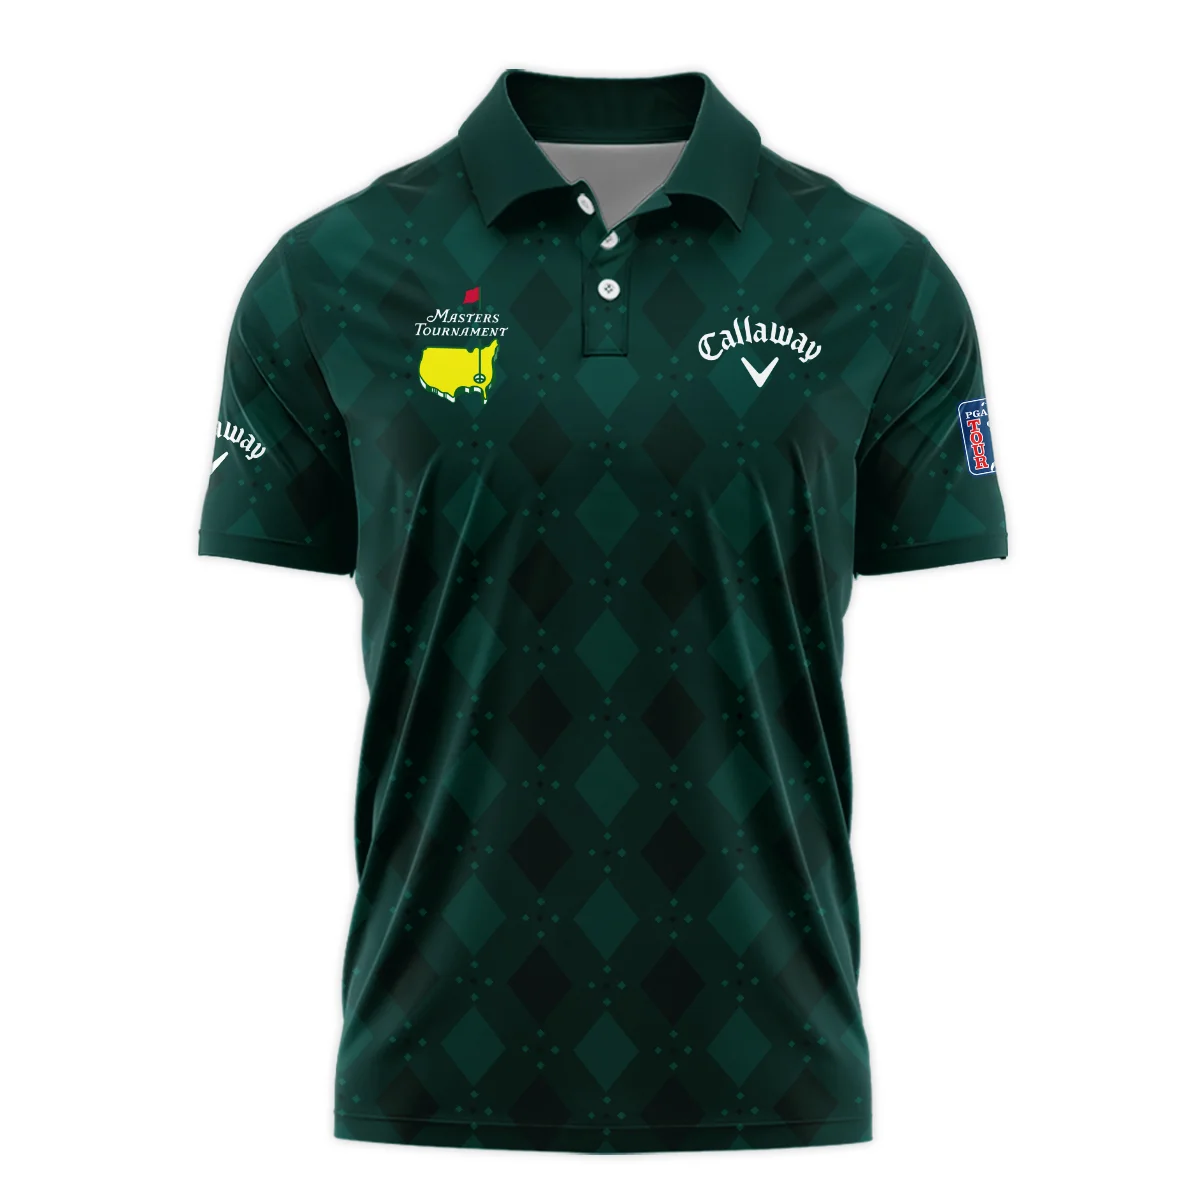 Dark Green Argyle Plaid Pattern Golf Masters Tournament Callaway Zipper Hoodie Shirt Style Classic Zipper Hoodie Shirt